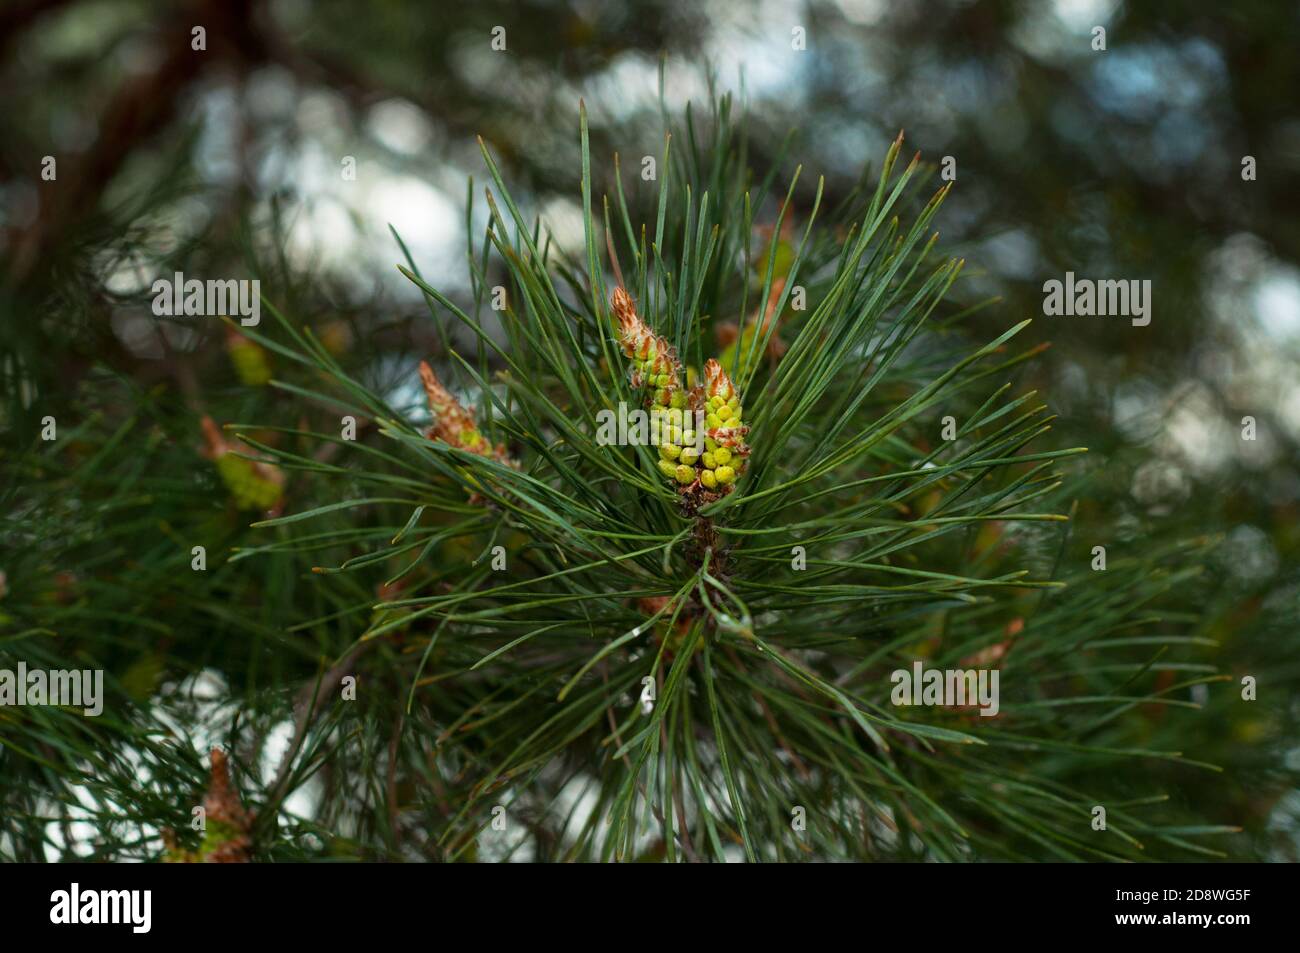 Green pine branches coniferous needles background closeup.Blur Stock Photo